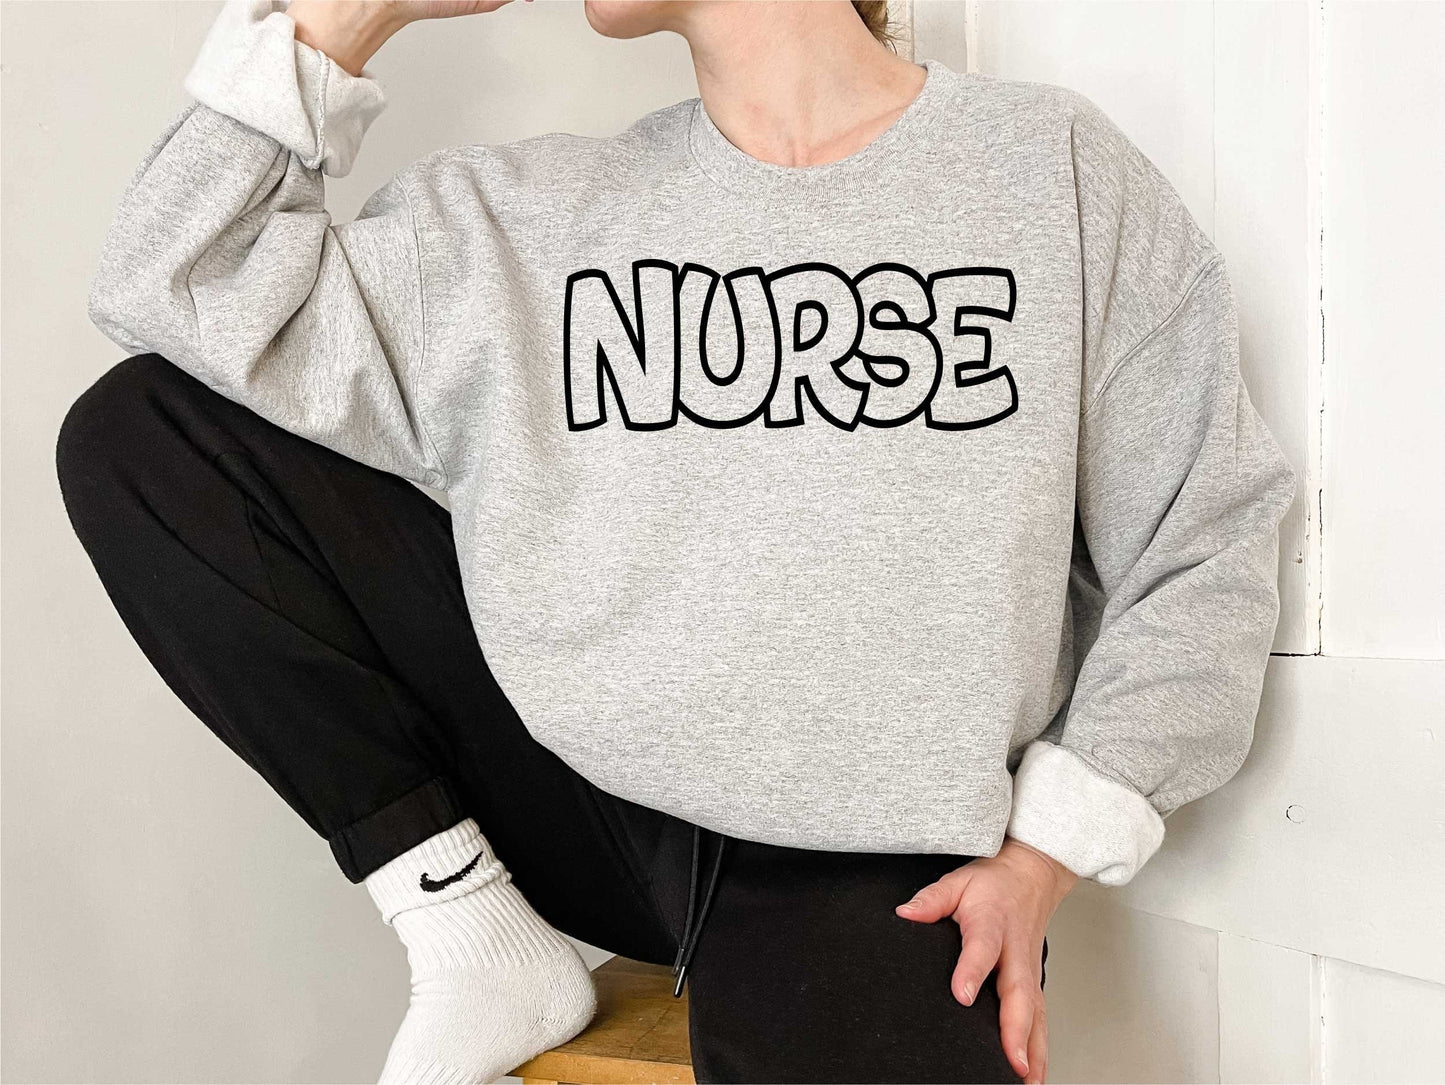 Nurse svg, Nurse Outline svg, Nurse shirt svg, Nurse Digital Design